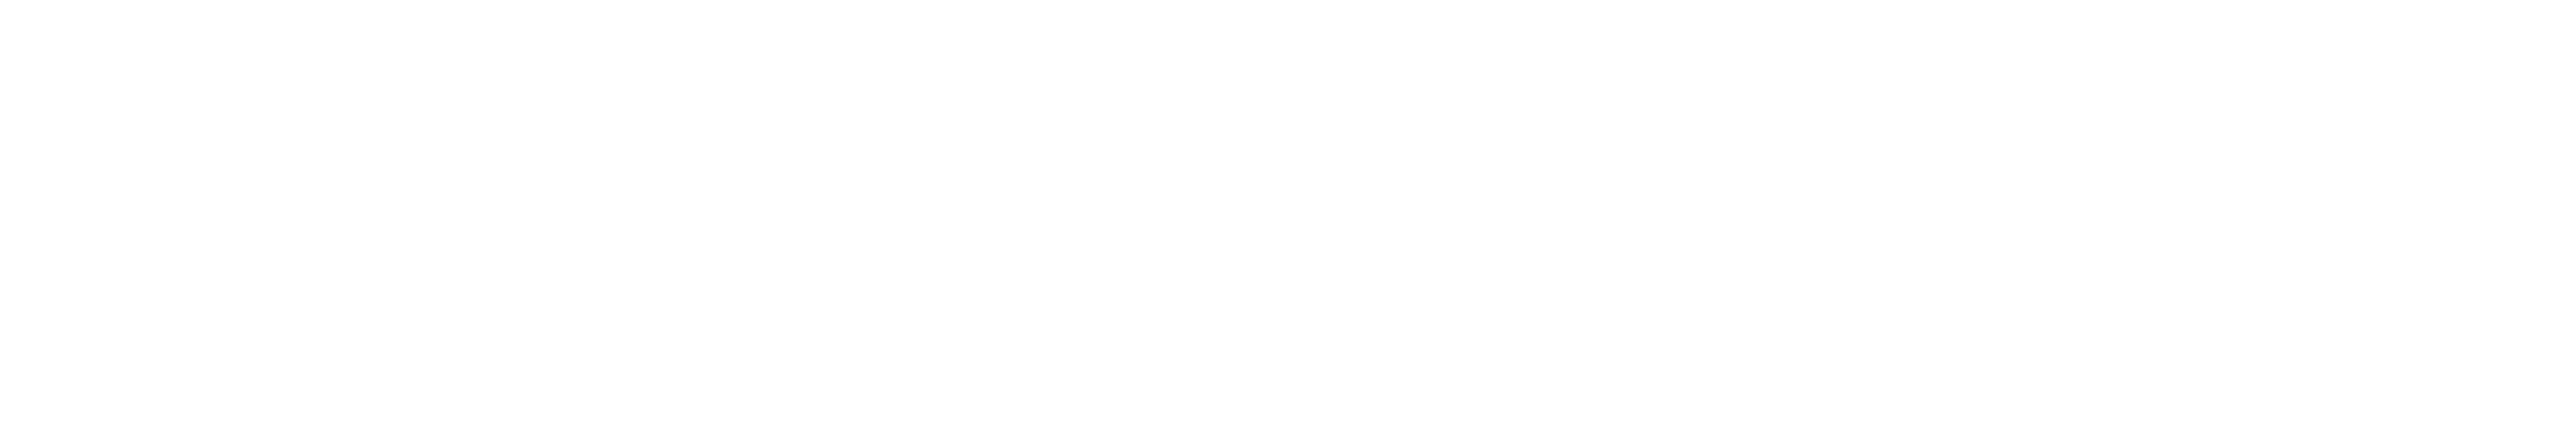 Microsoft Power Automate logo white